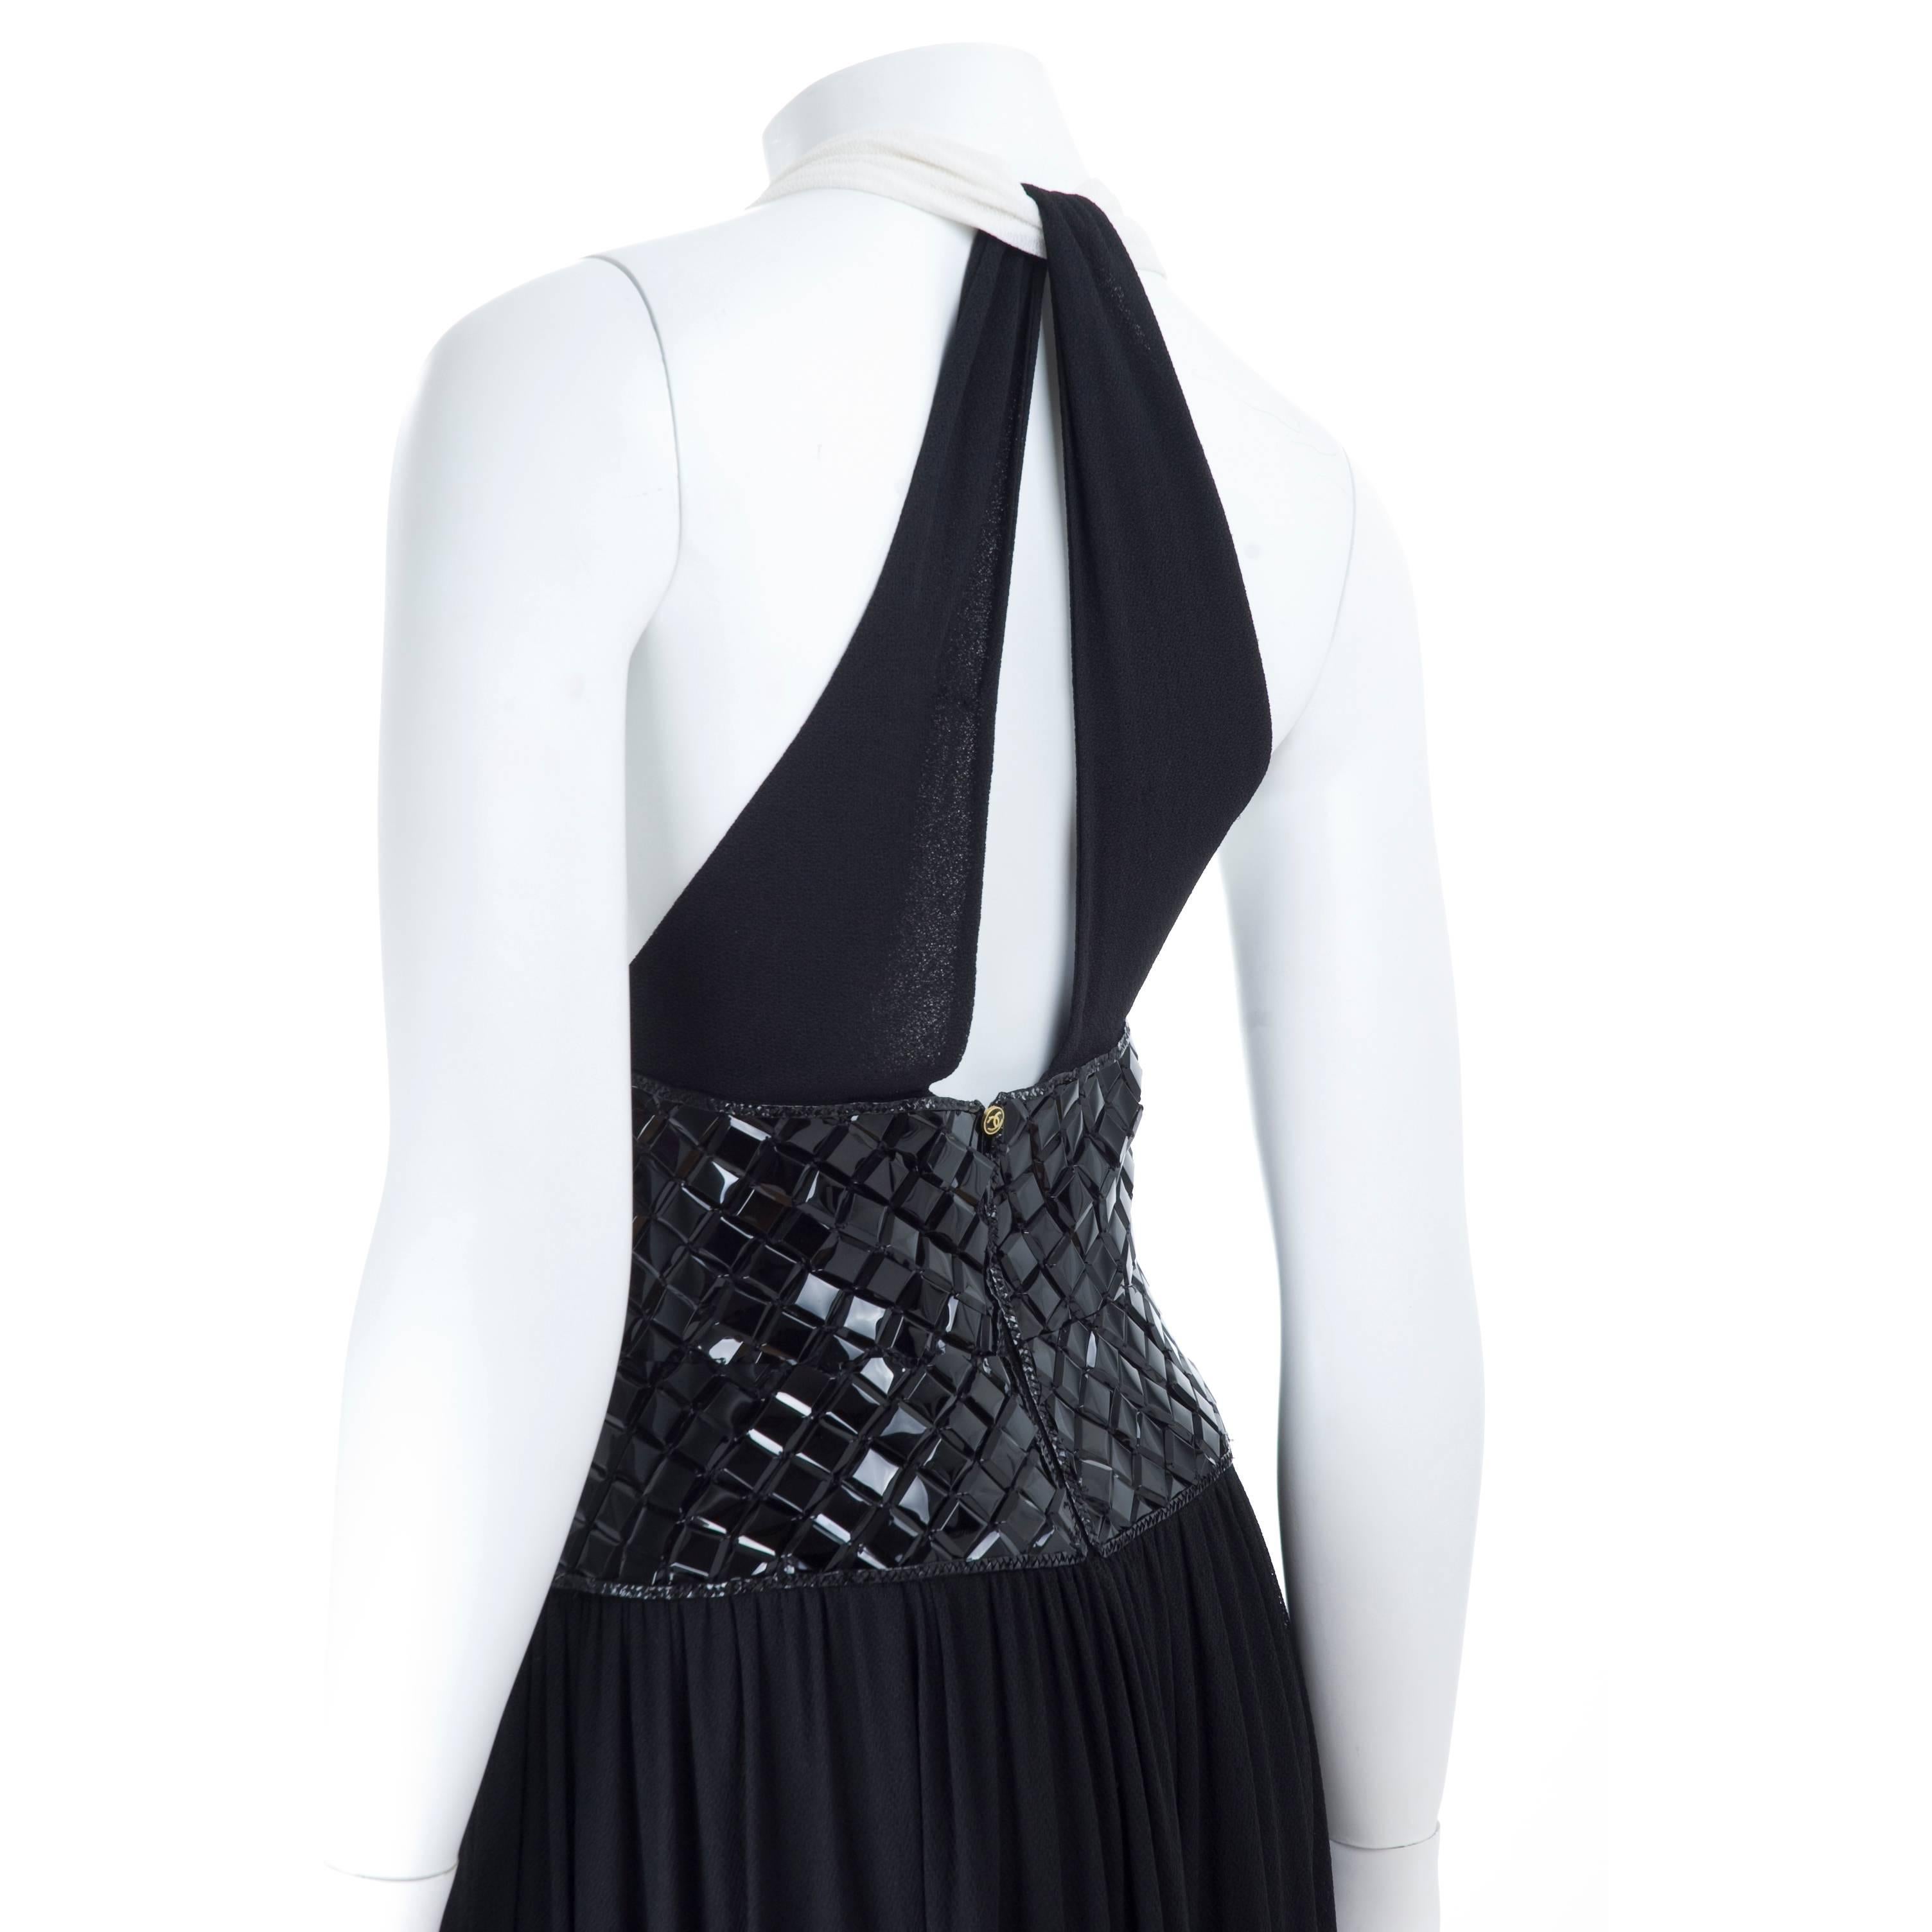 1995 Vintage Chanel Evening Dress Black & White Documented For Sale 4